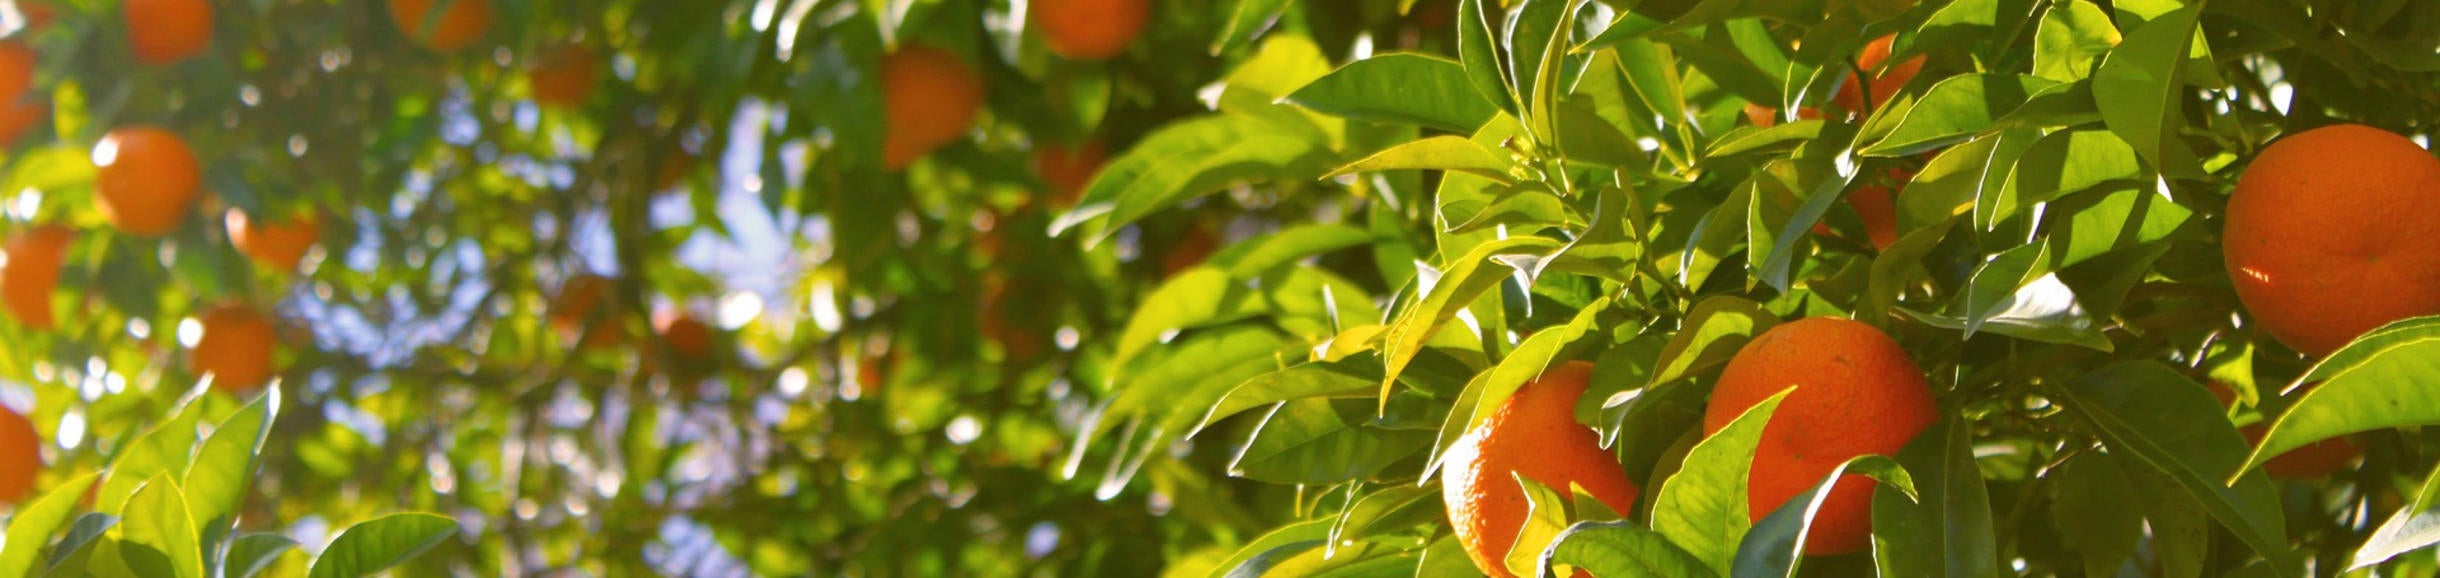 oranges in a tree (c) pixabay